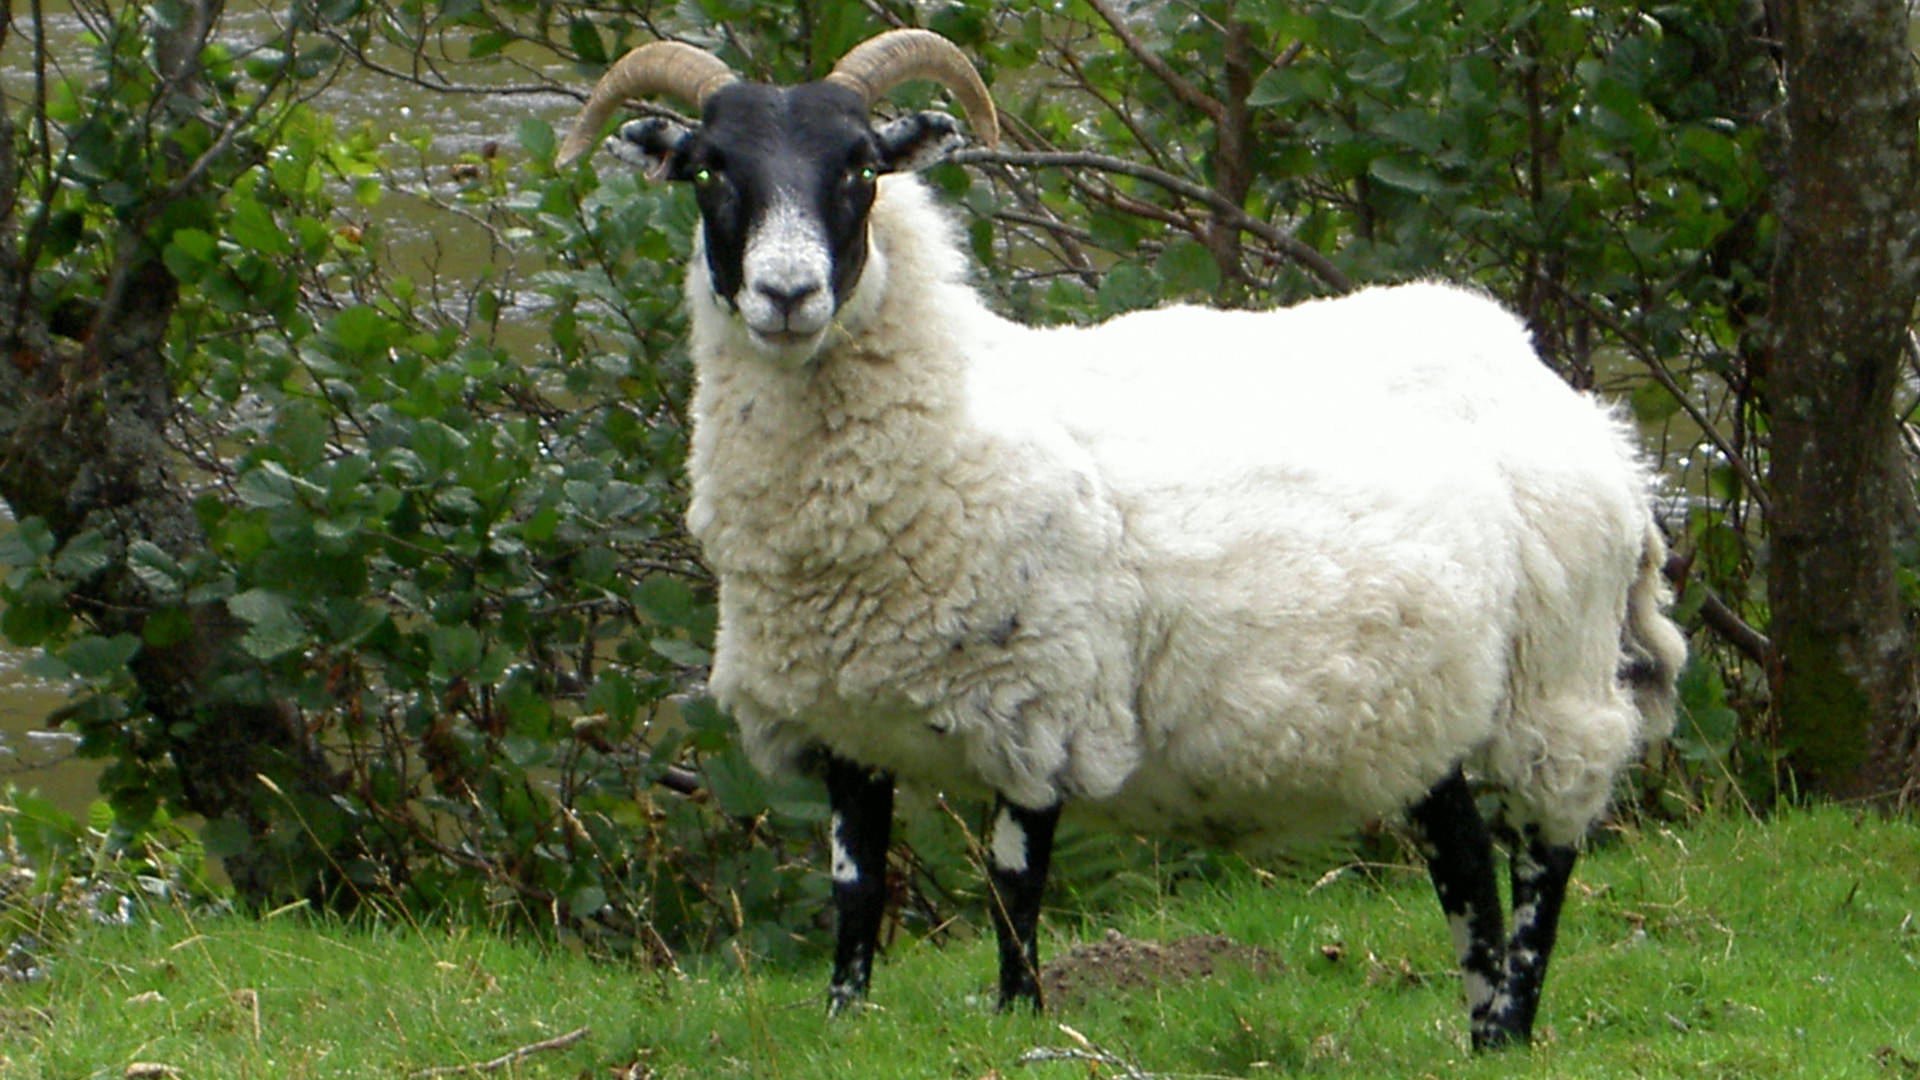 Caption: An Elegant Black-headed White Goat In High Resolution Background